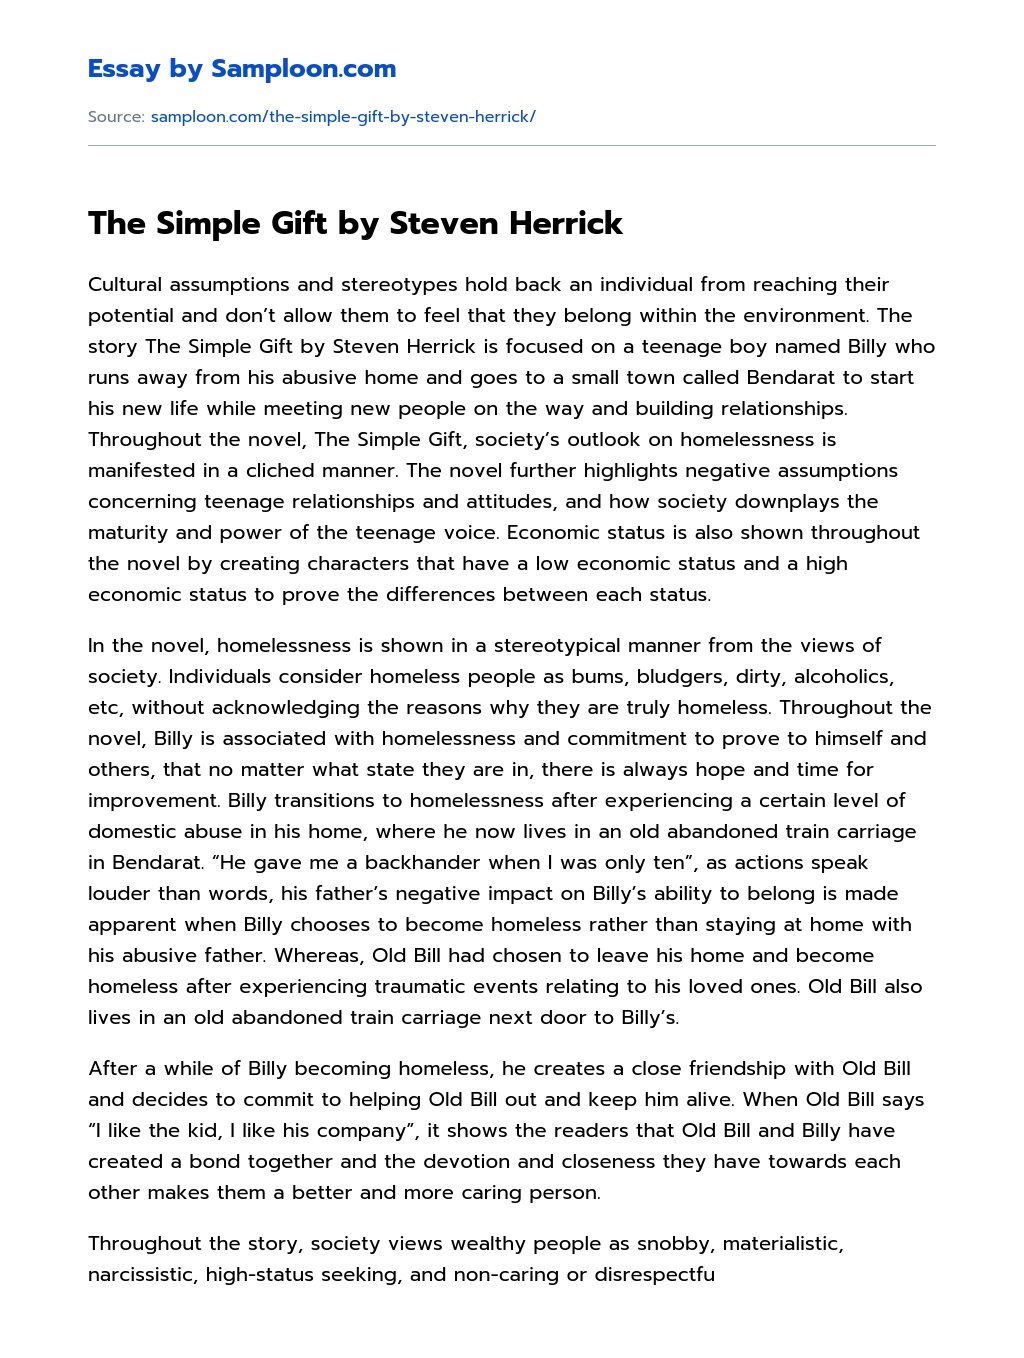 The Simple Gift by Steven Herrick essay